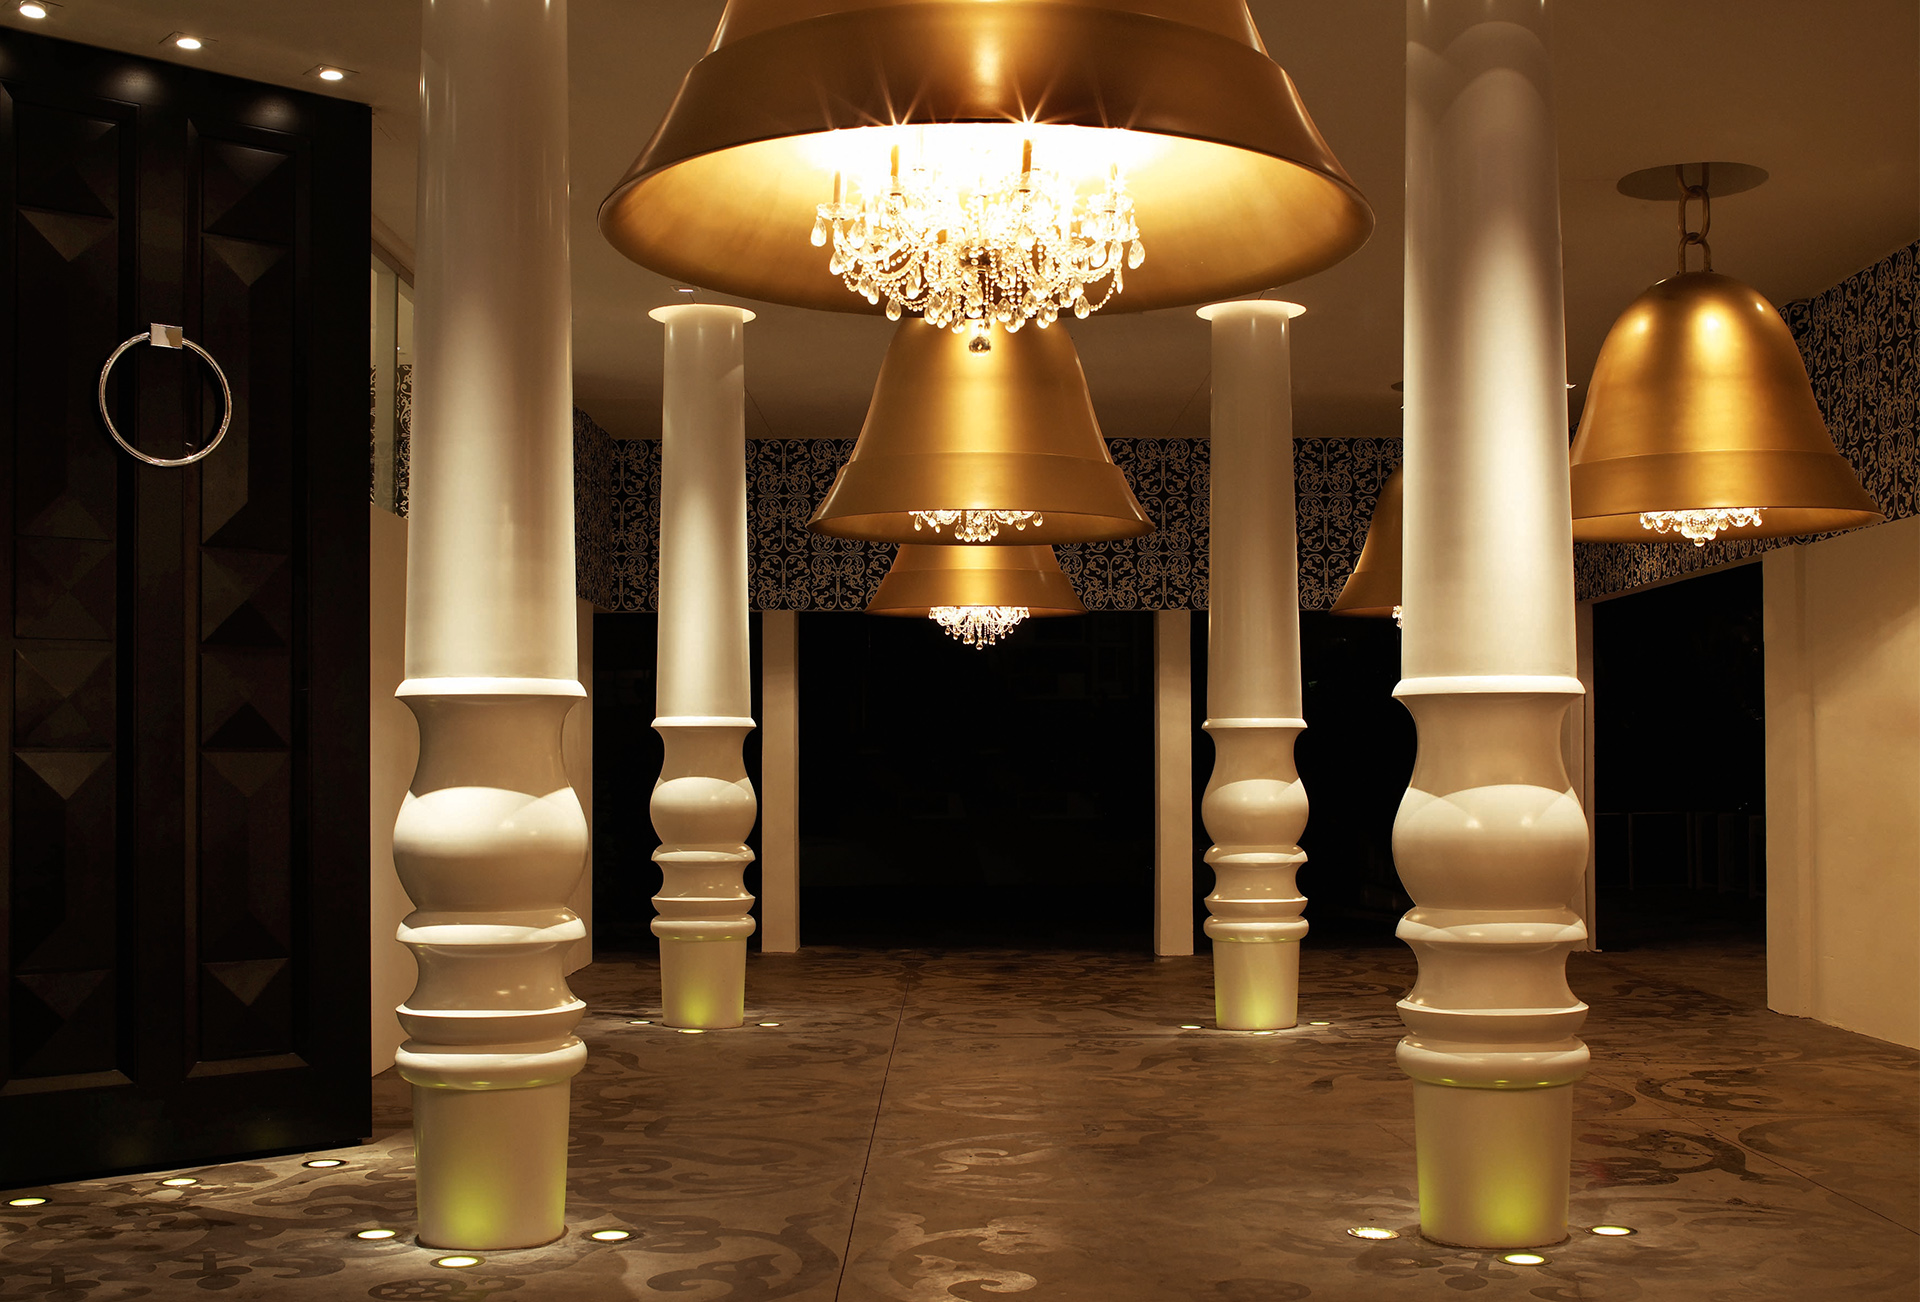 Huge, golden bell-lamps hang in a hall between white columns.